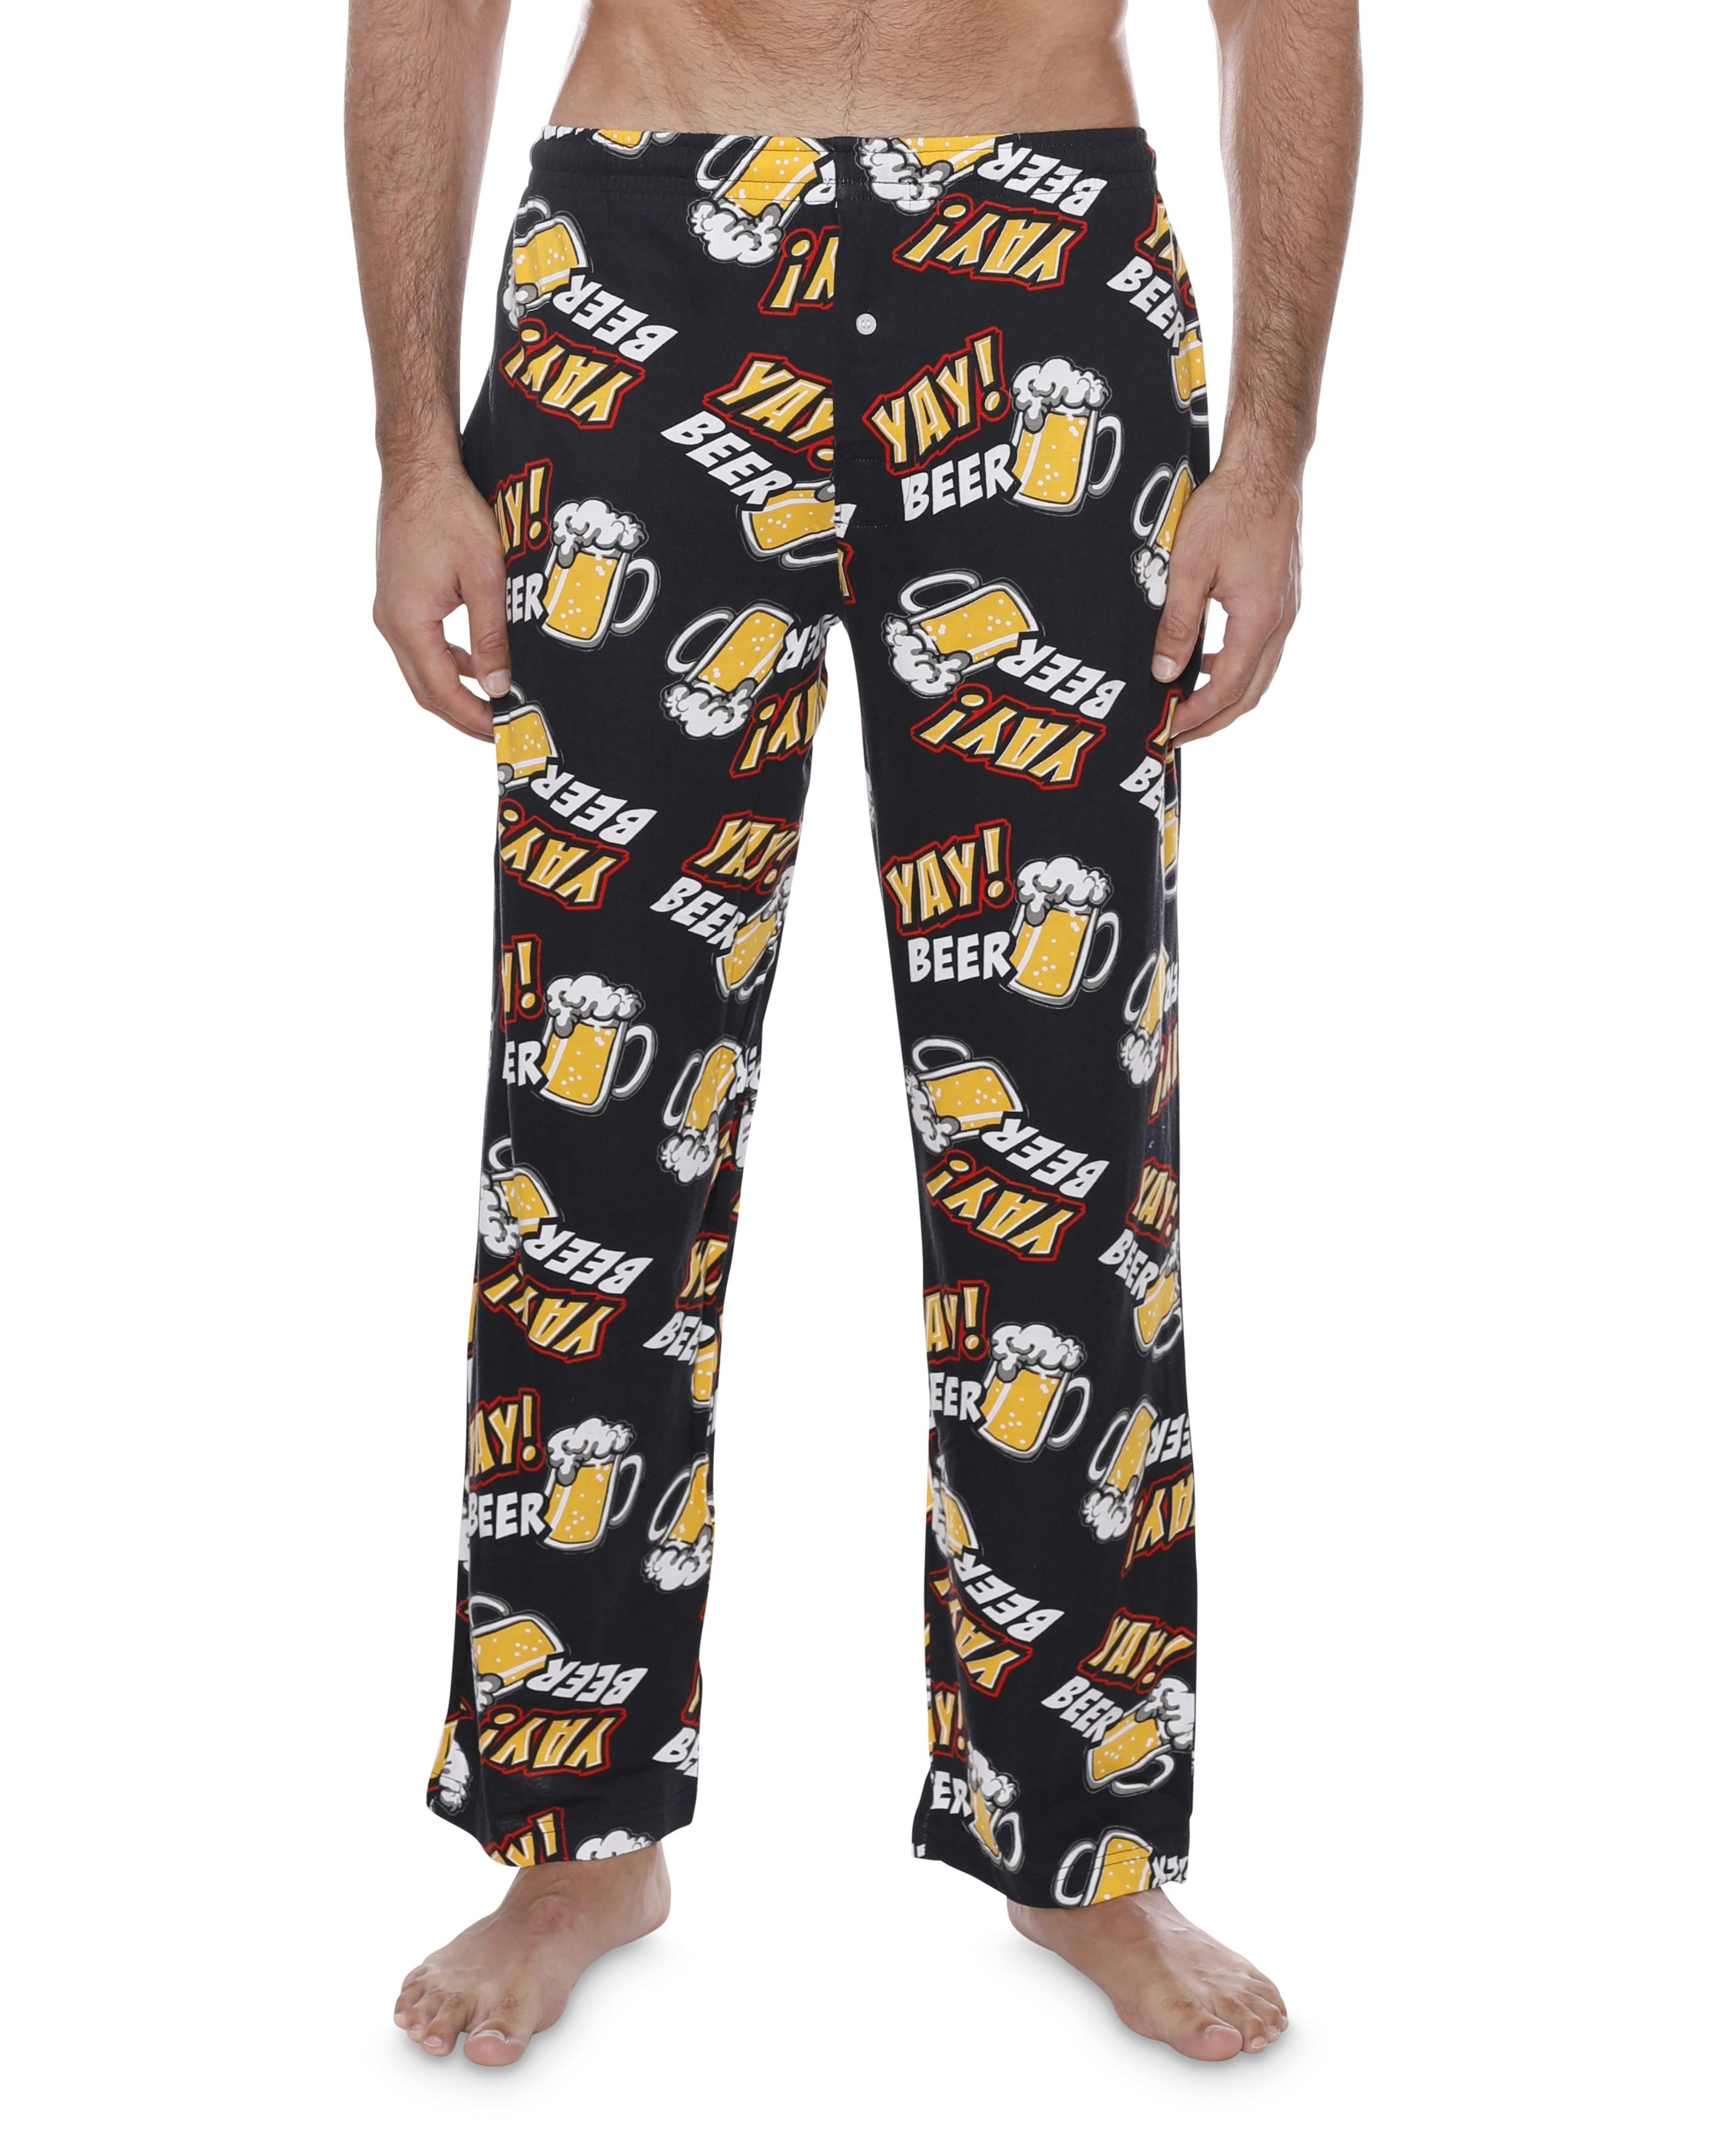 Mens Fun Pants Lounge Pajama Pants Boxers Adult Sleepwear, Yay